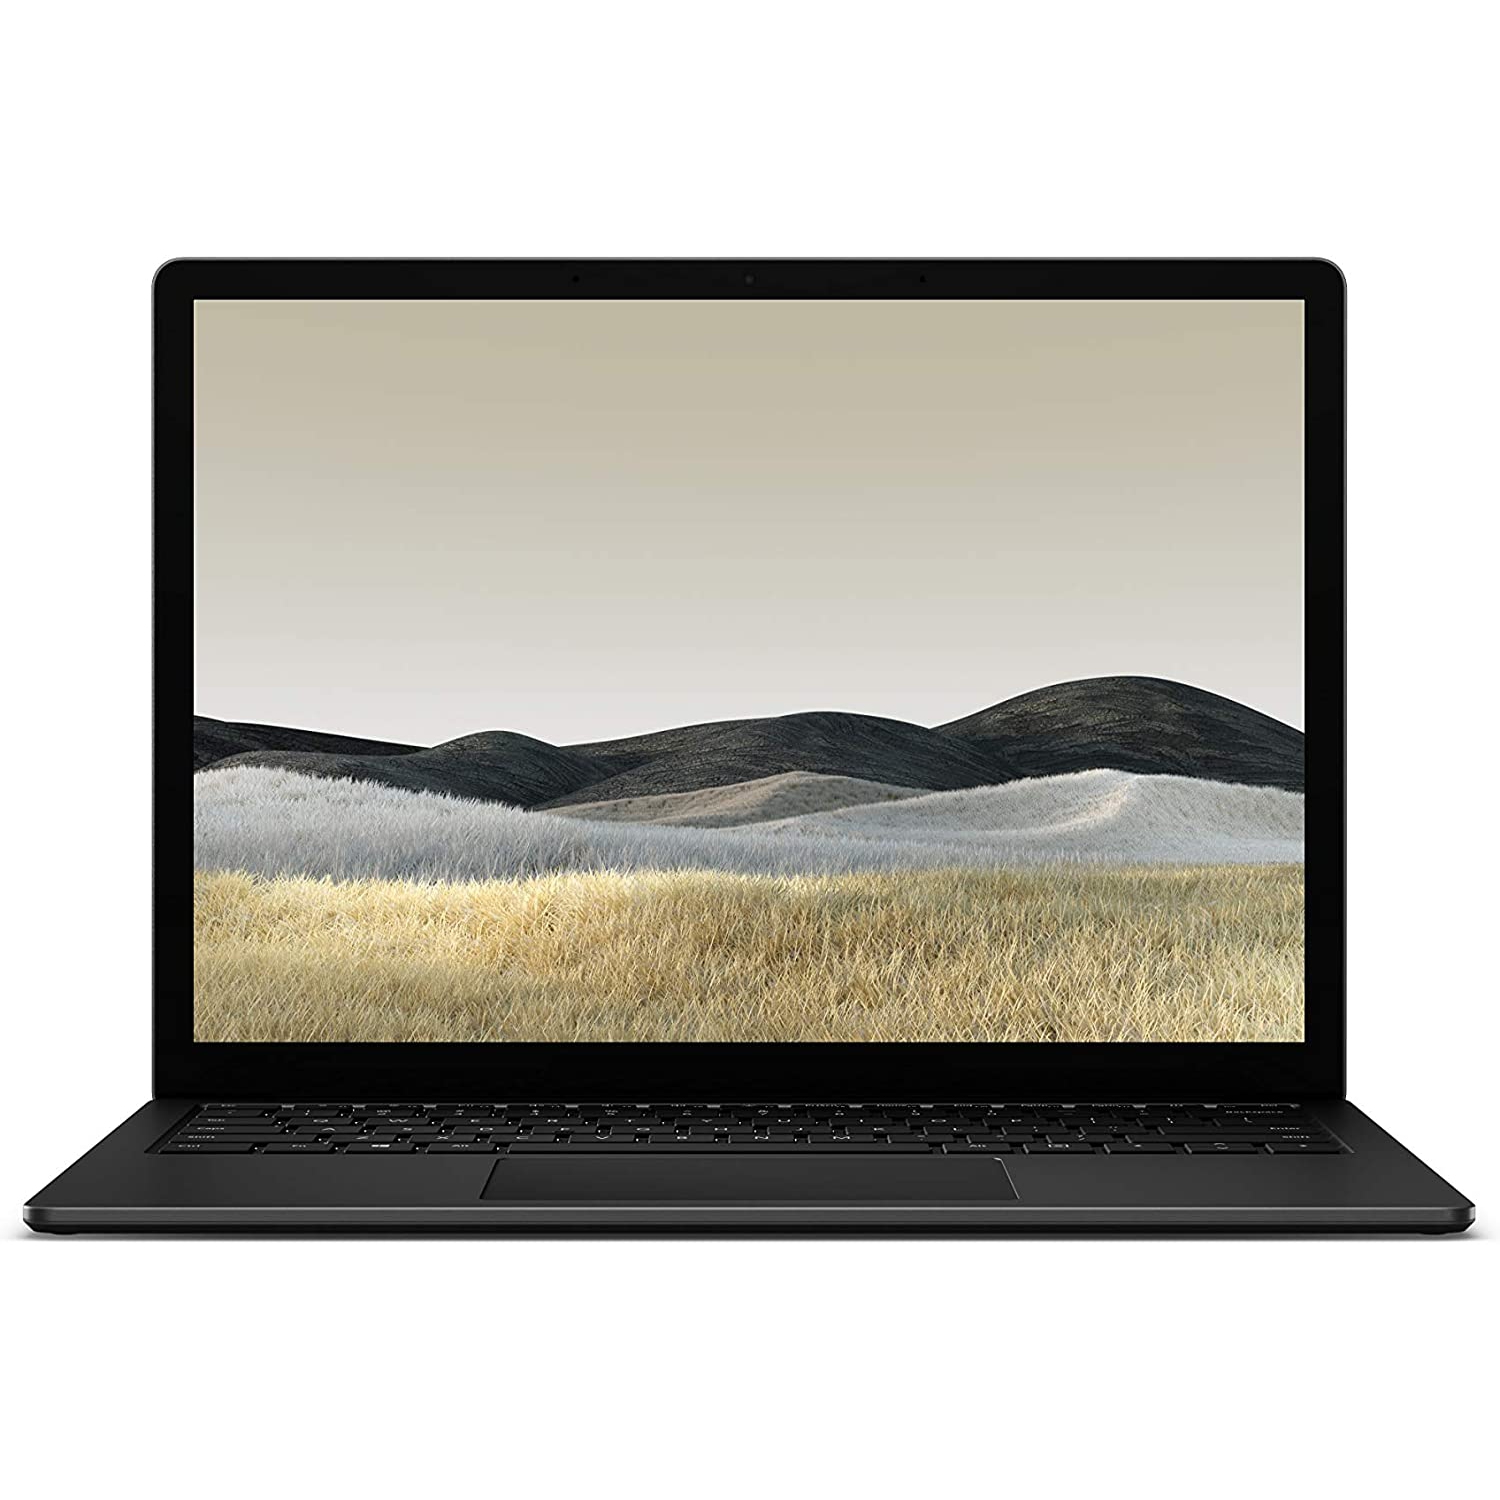 Refurbished (Excellent) - Microsoft Surface Laptop 3, AMD Ryzen 5, 8 GB RAM, 256 GB SSD, Black, 15" - Certified Refurbished